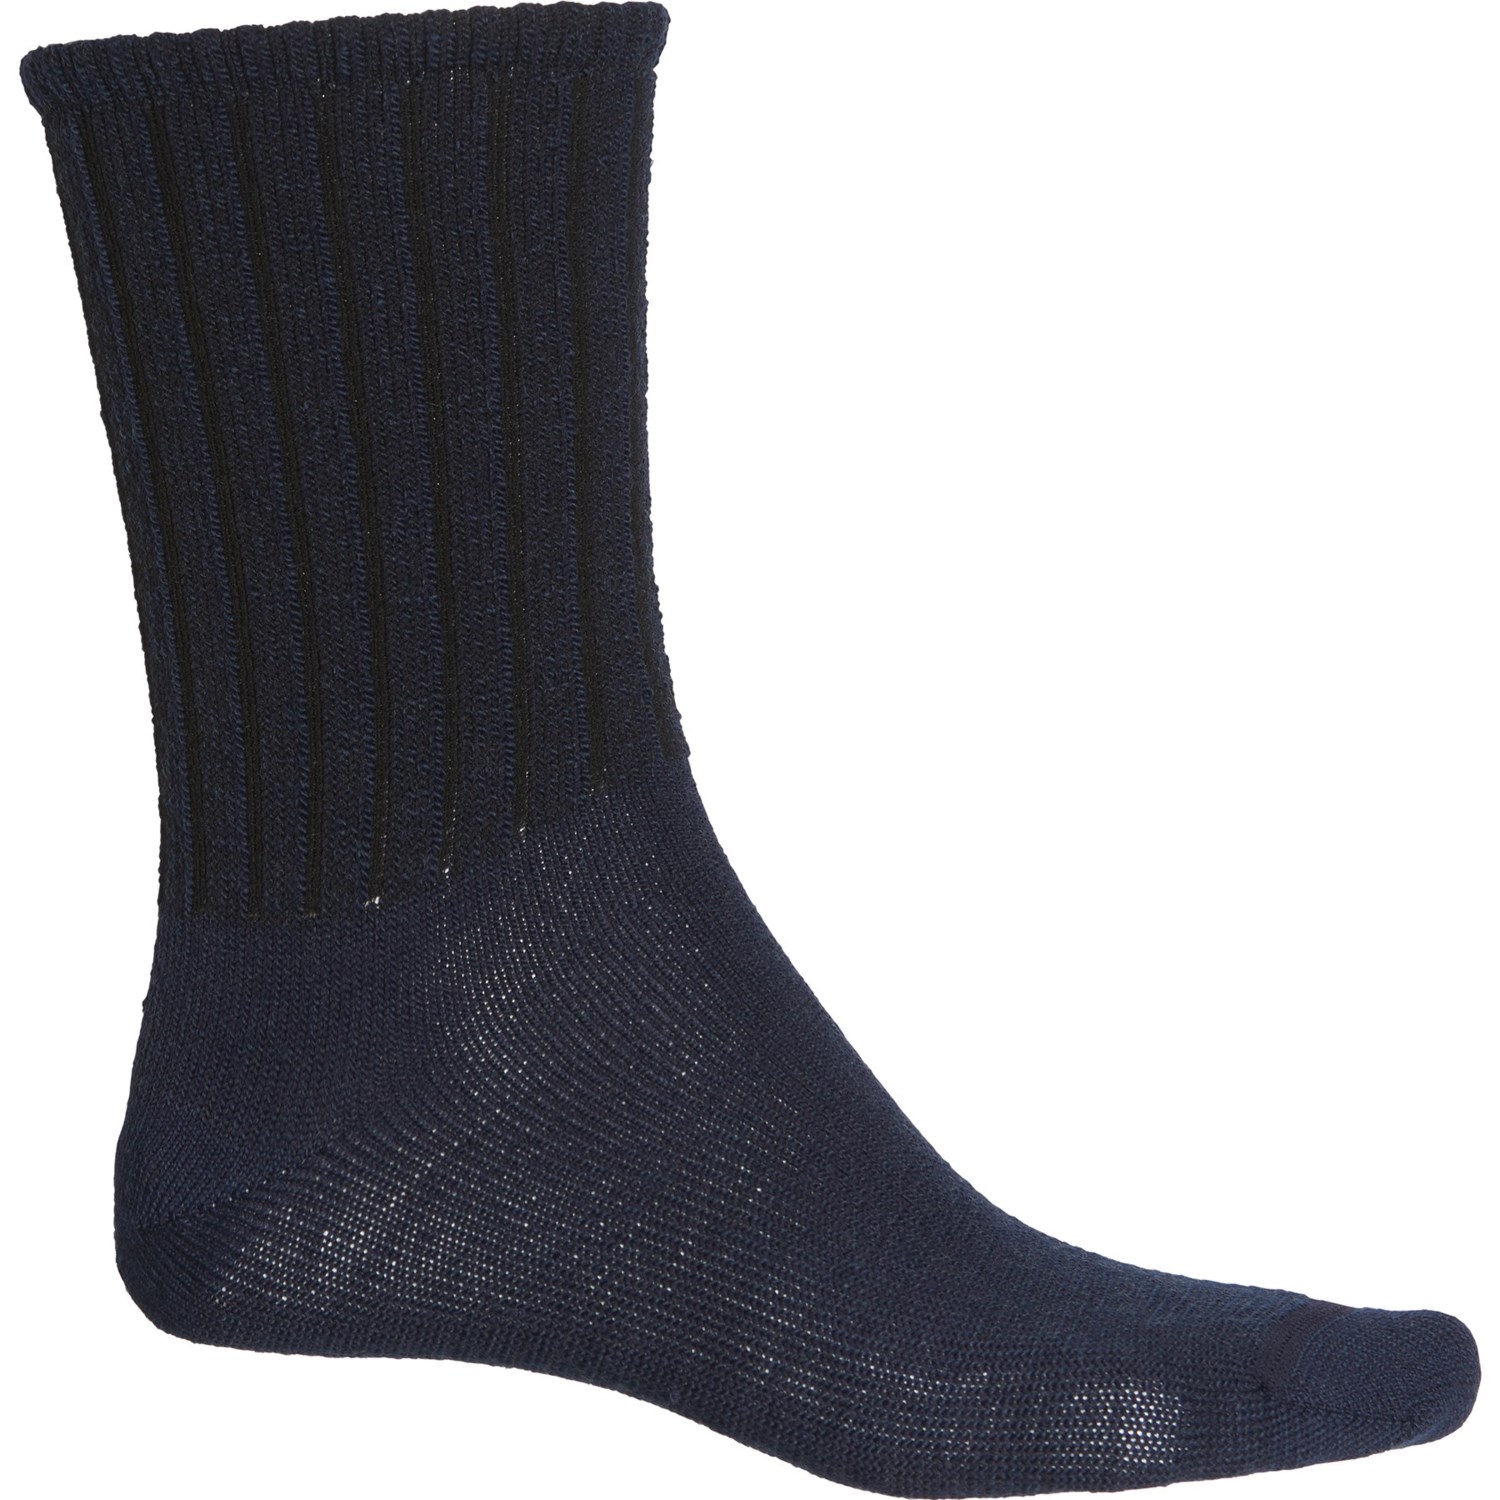 Patagonia Daily Socks - Merino Wool, Crew (For Men and Women)